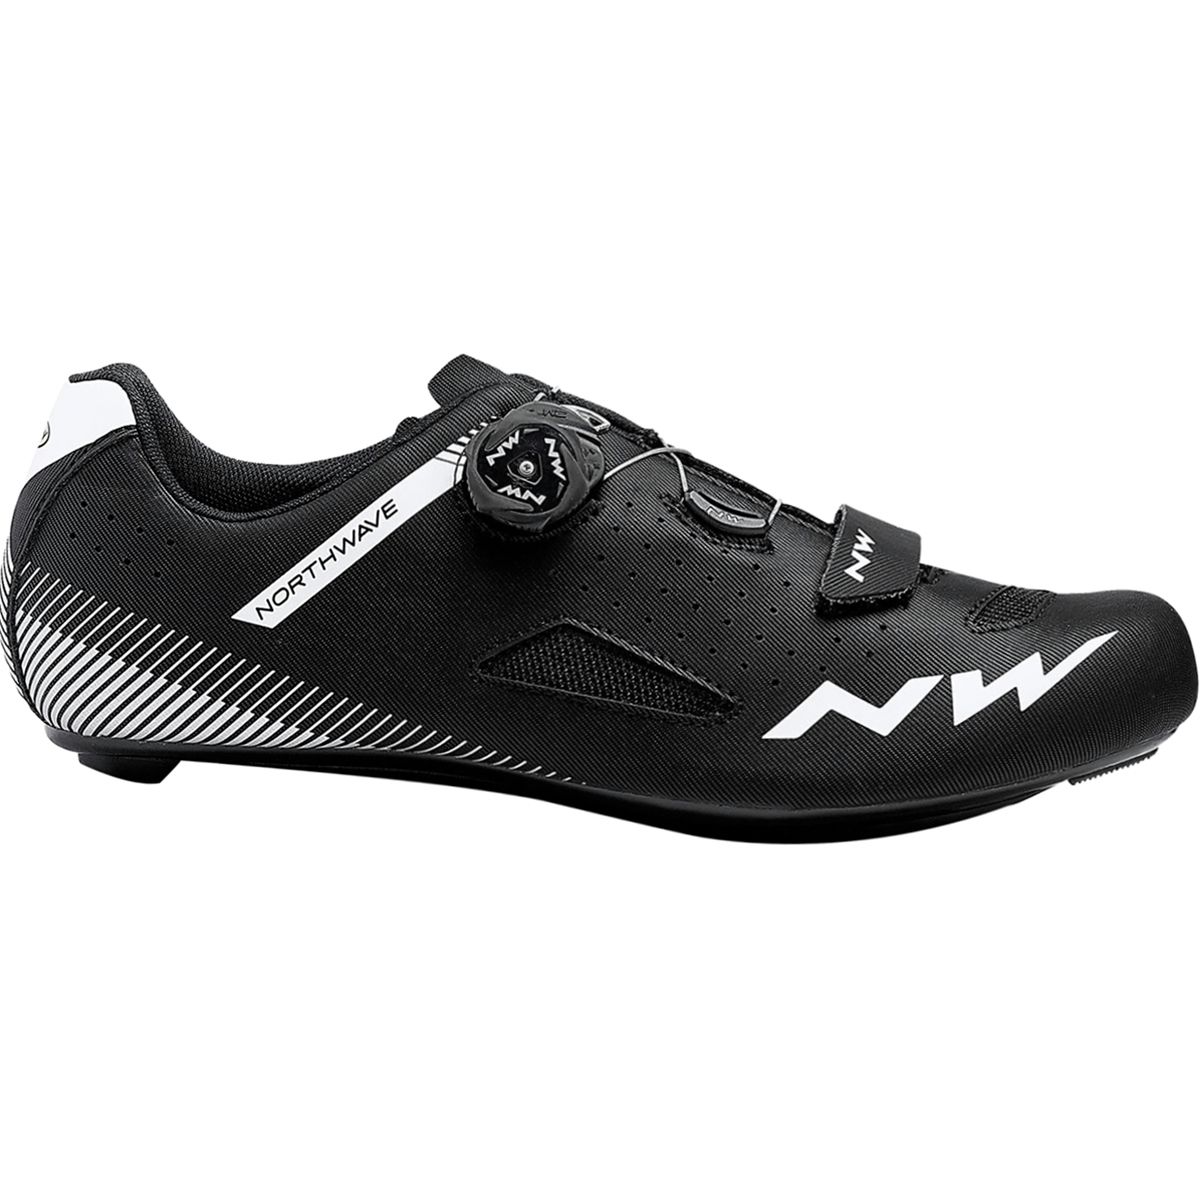 Northwave Core Plus Cycling Shoe - Wide - Men's